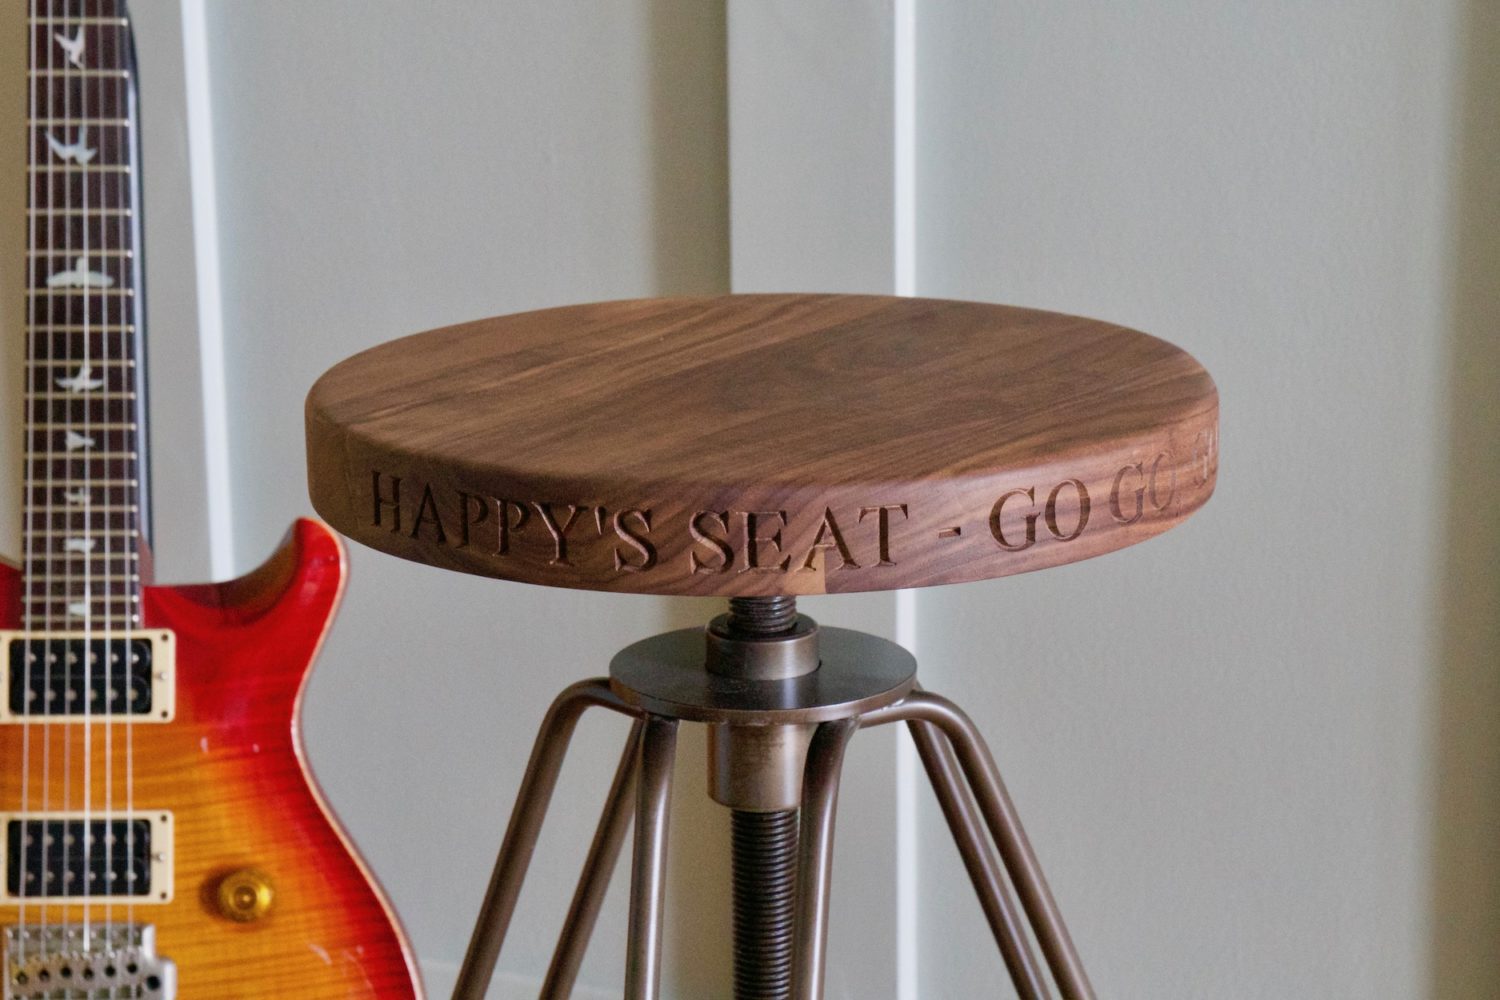 engraved-swivel-stool